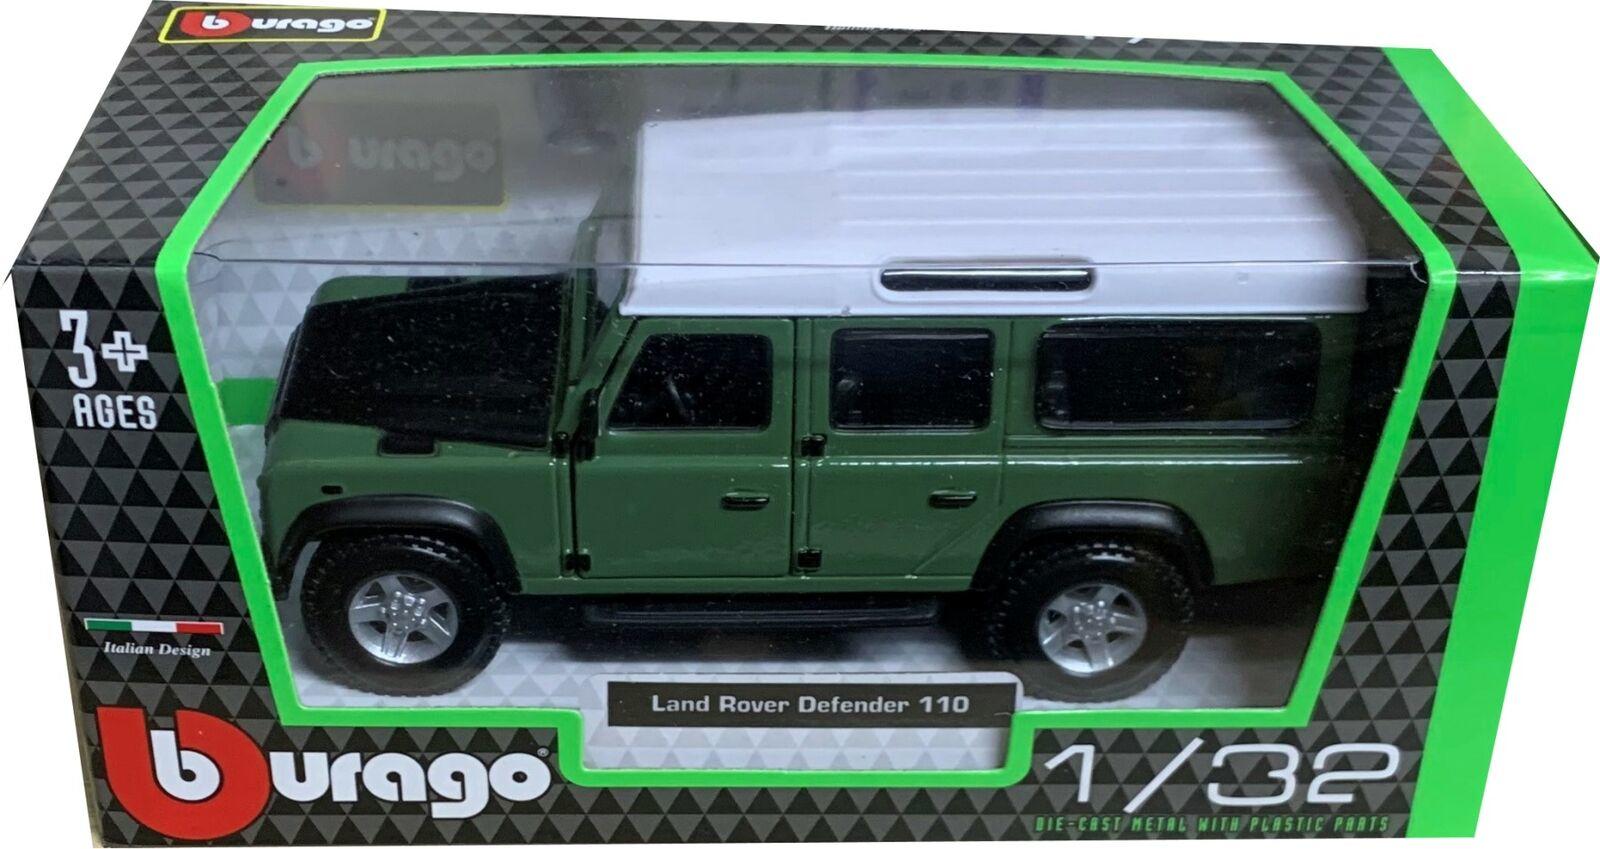 Land Rover Defender 110 in green / white / black 1:32 scale model from Bburago